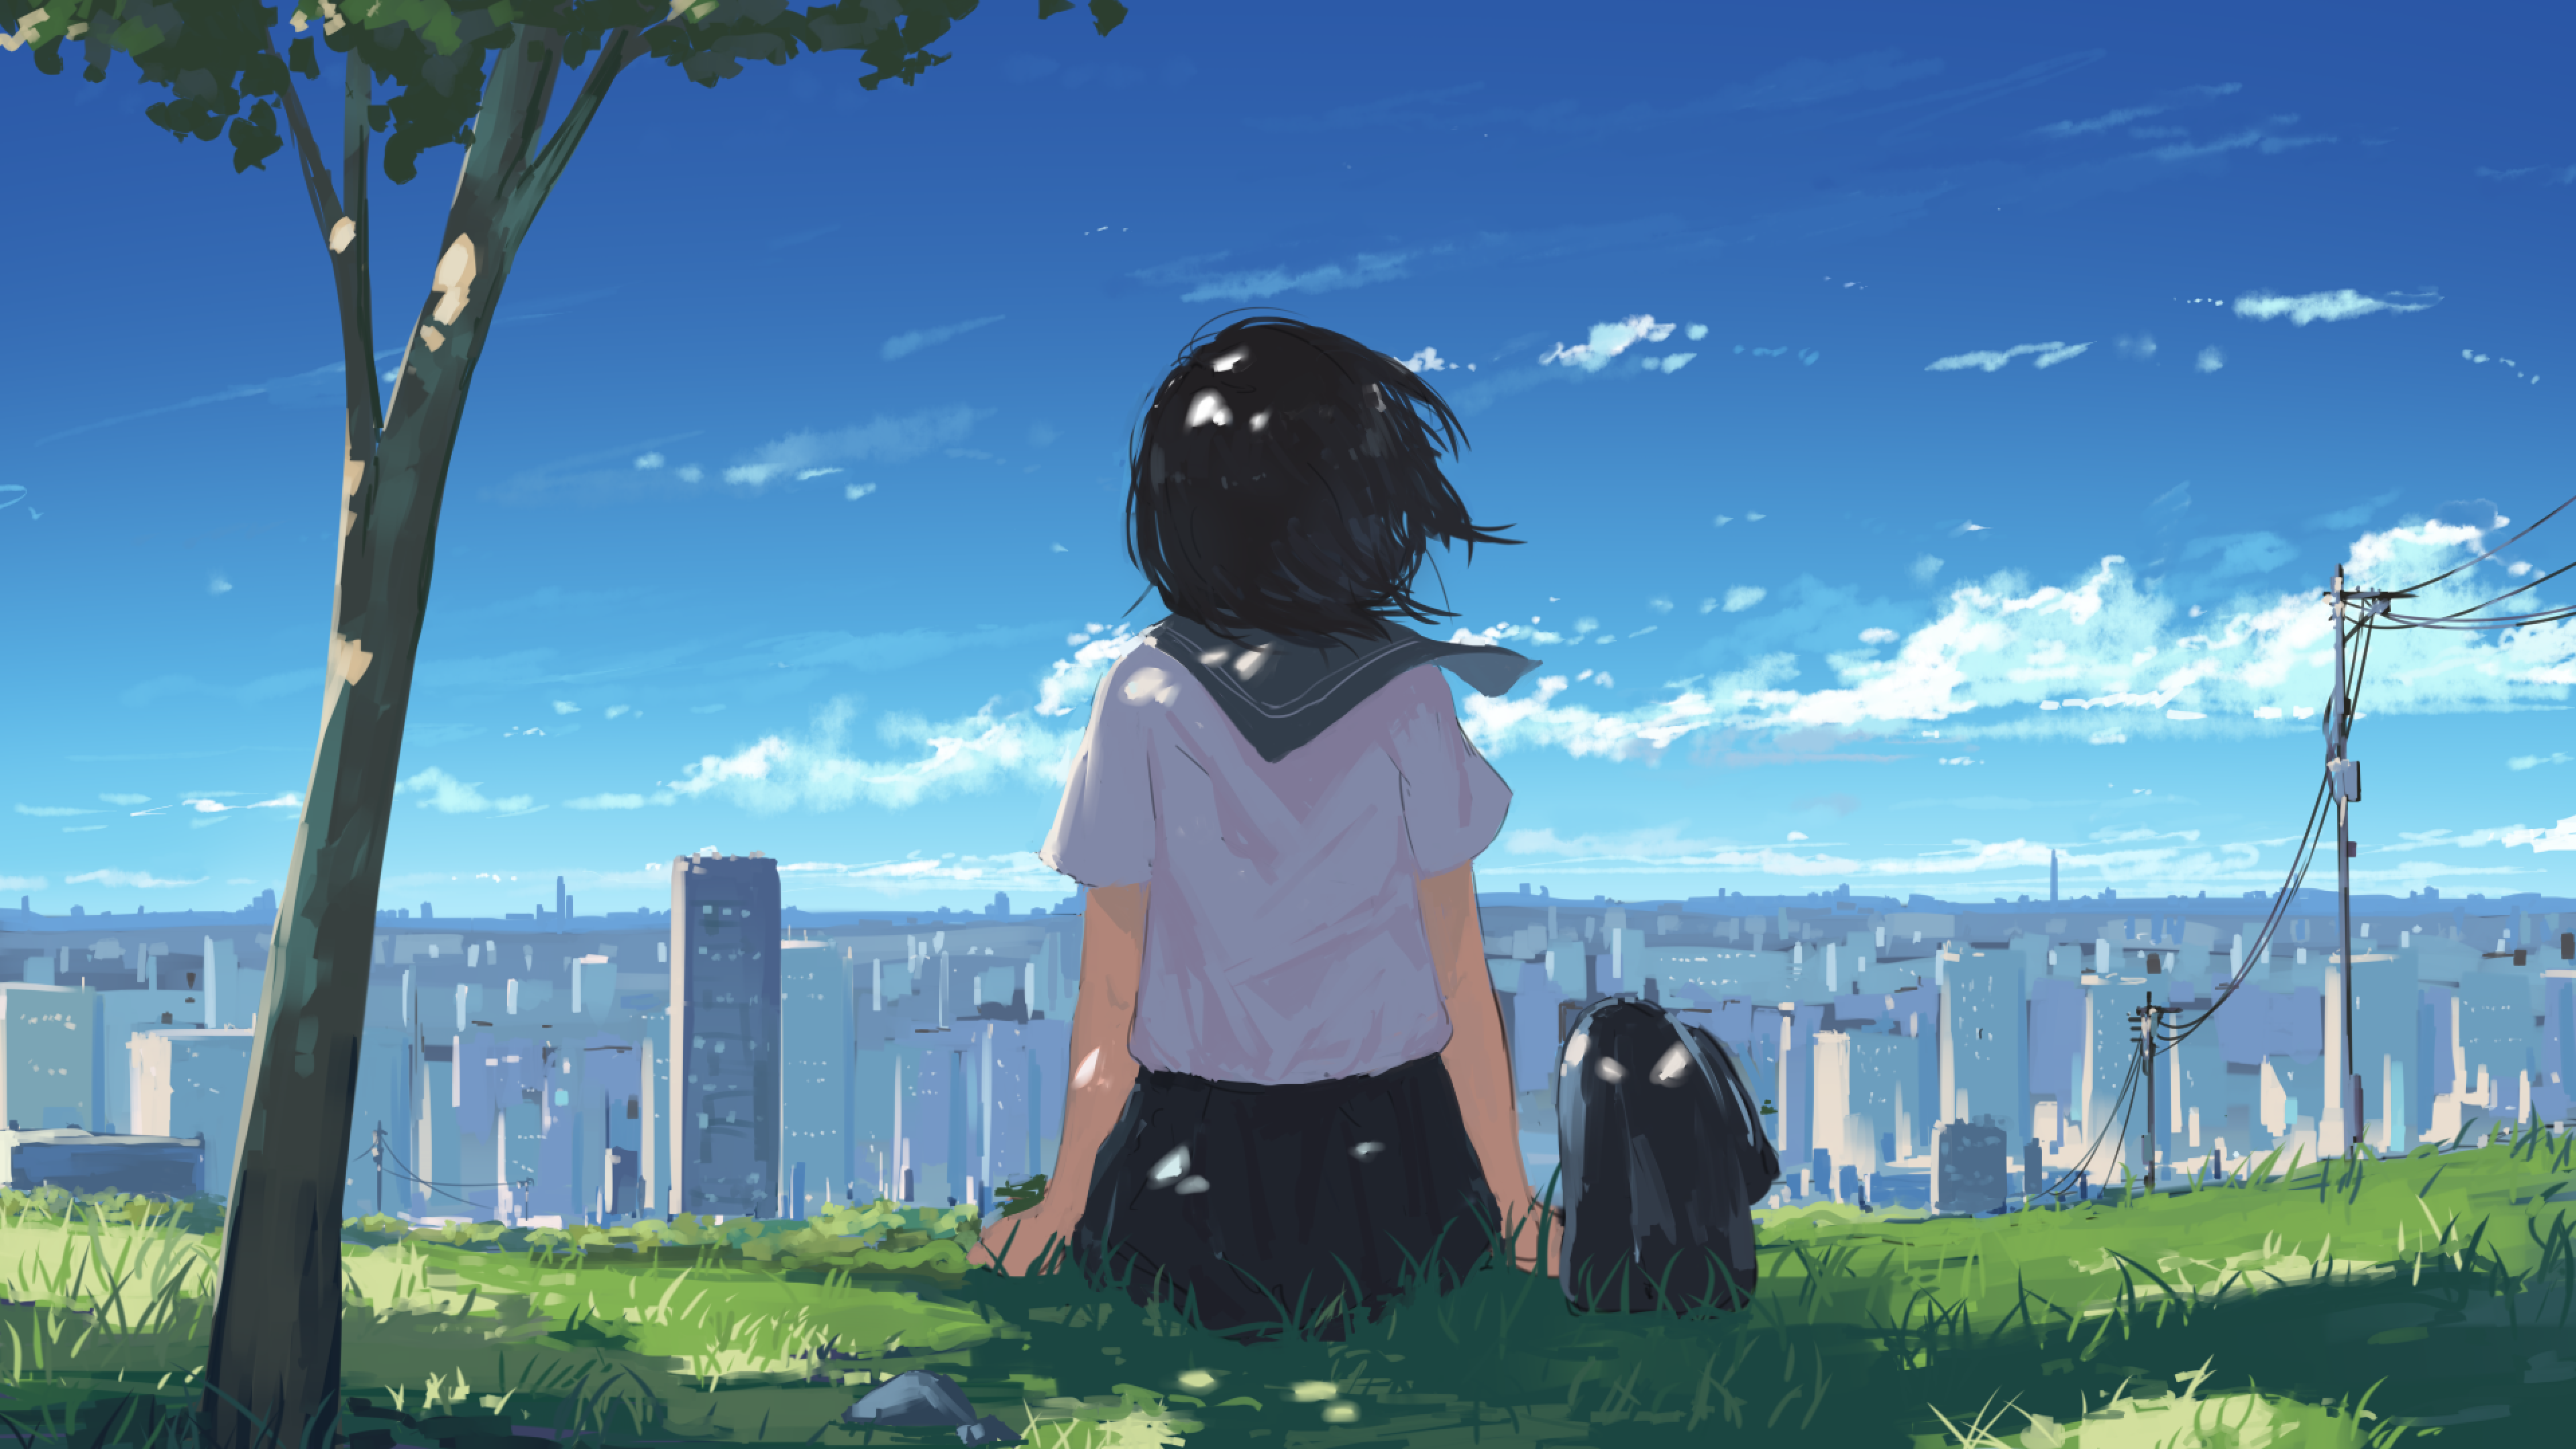 Download 3840x2160 Anime School Girl, Anime Landscape, Cityscape, School Uniform, Back View Wallpaper for UHD TV